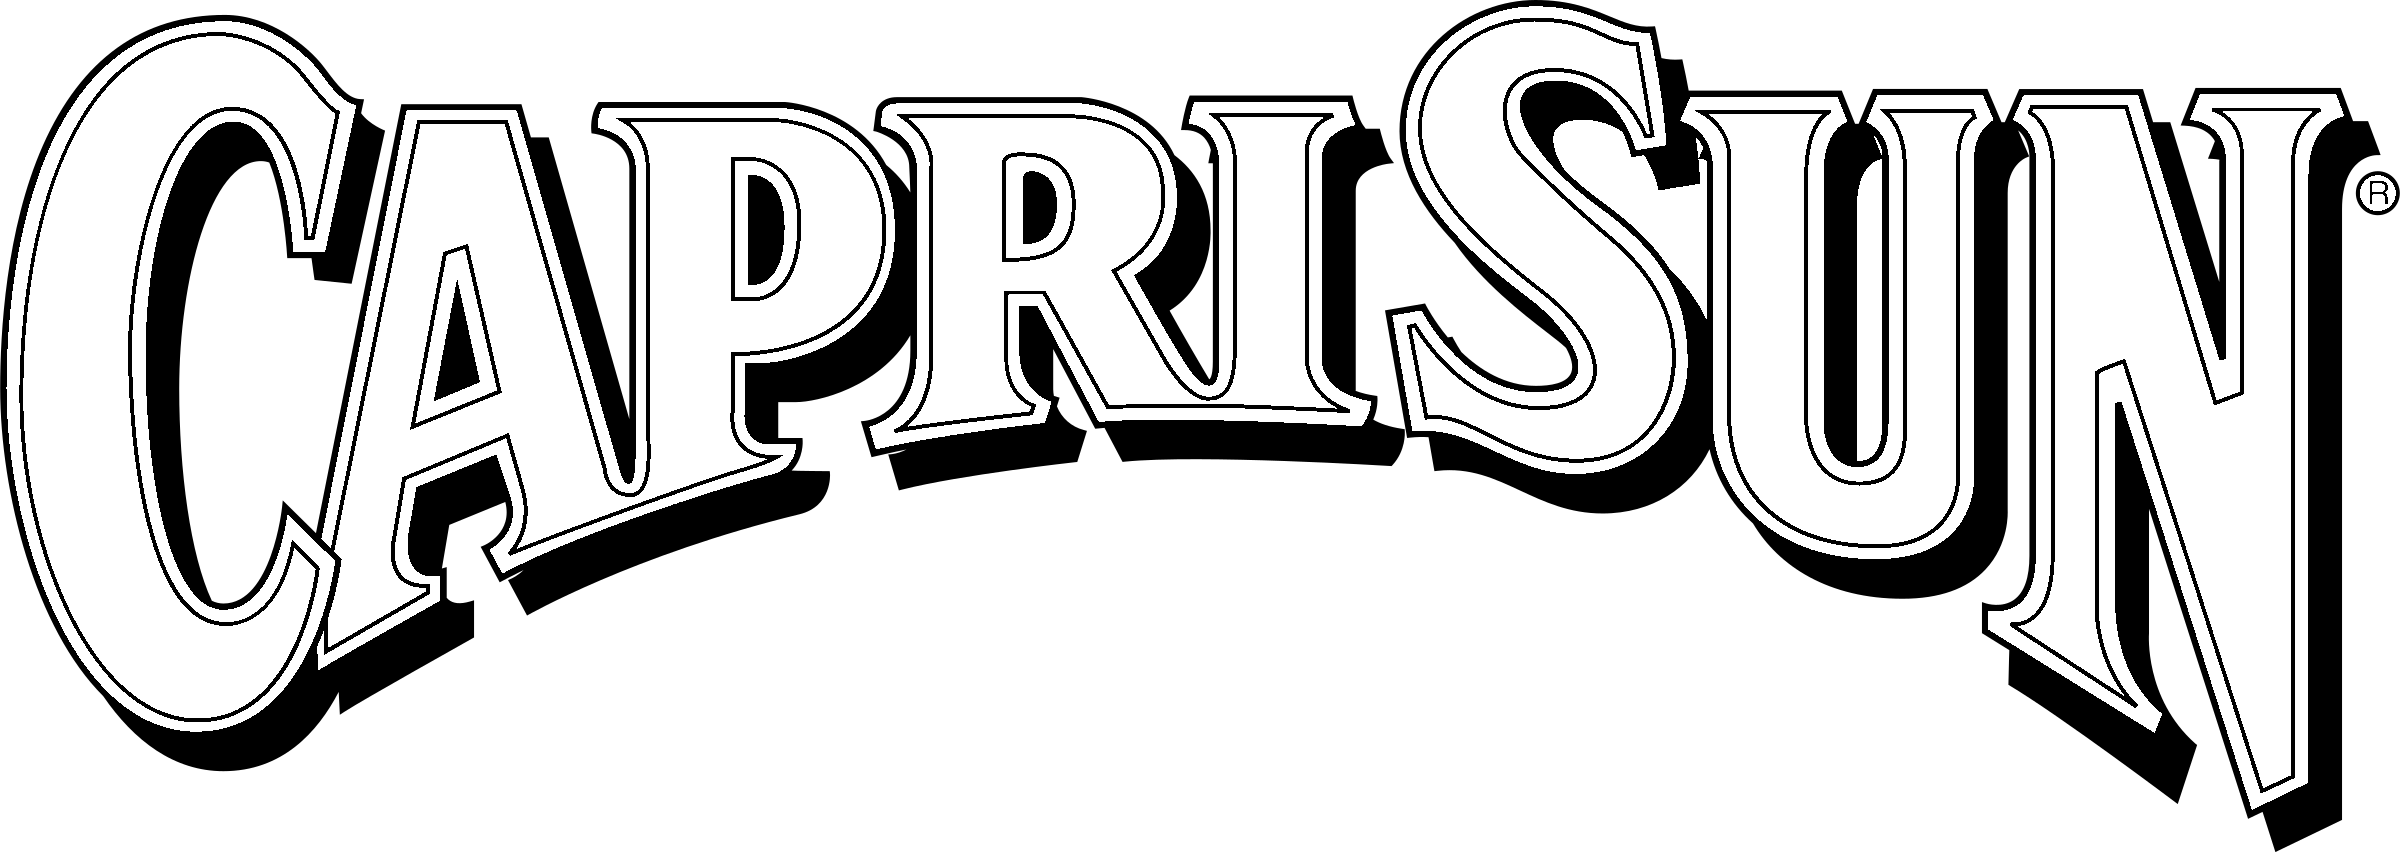 Caprisun Logo Black And White - Capri Sun (2400x852), Png Download